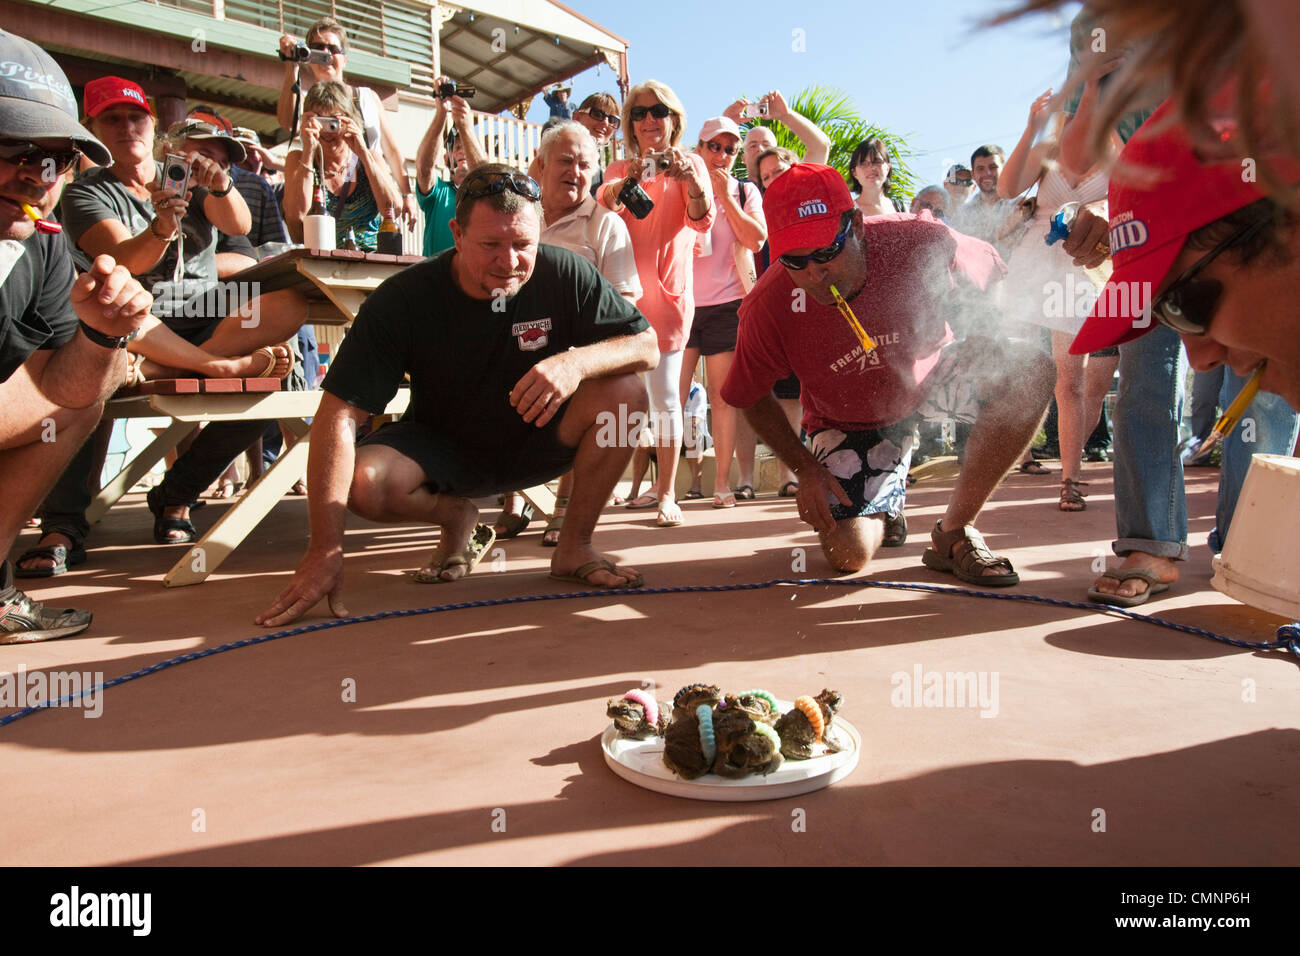 Cane Toad racing während des Festivals Cooktown Entdeckung. Cooktown, Queensland, Australien Stockfoto